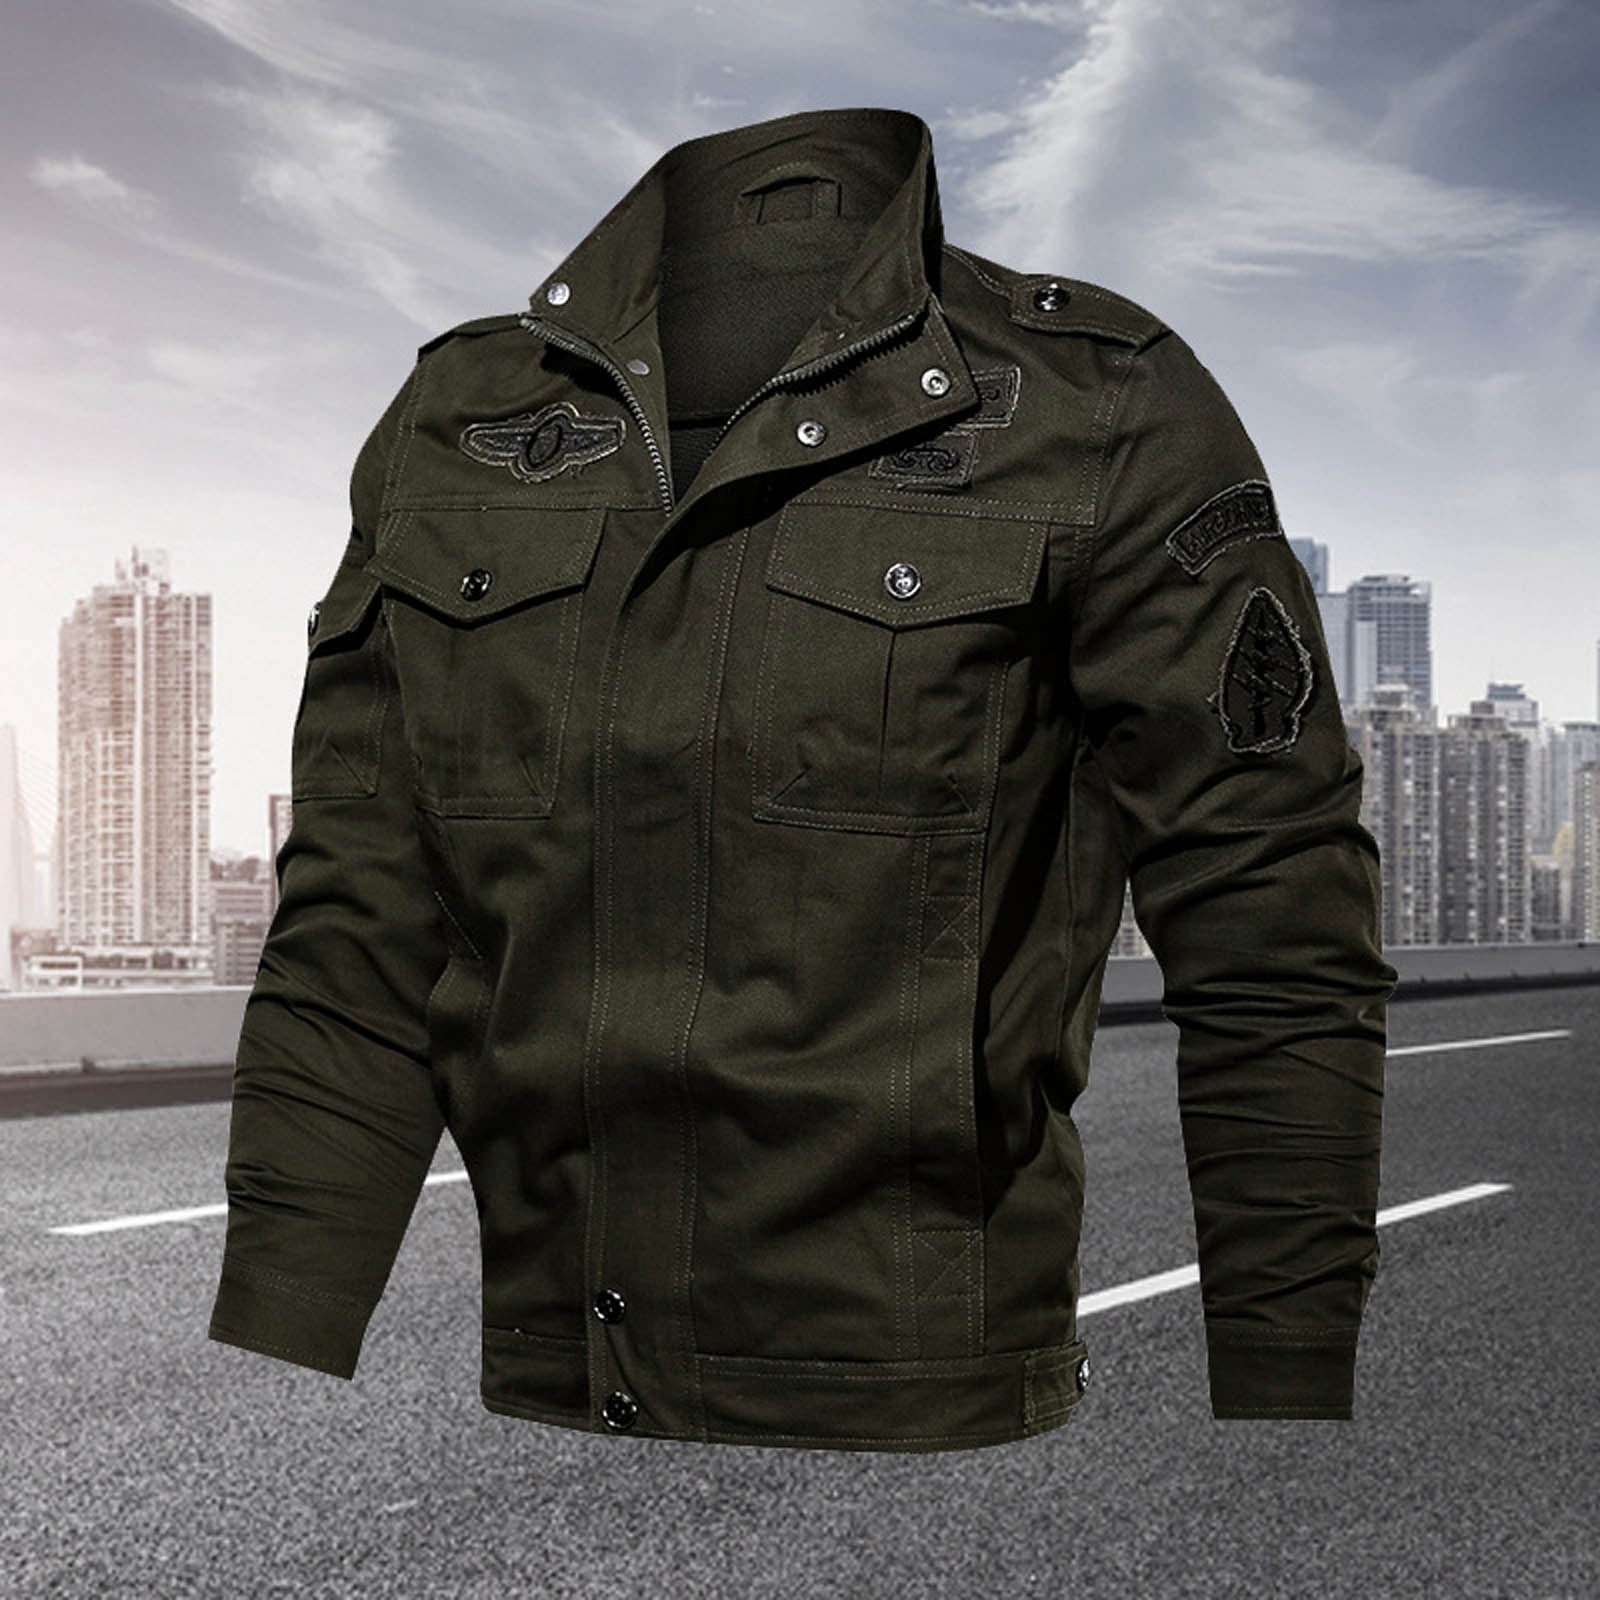 Xysaqa Men's Spring Fall Military Jackets Coat Cotton Lightweight 